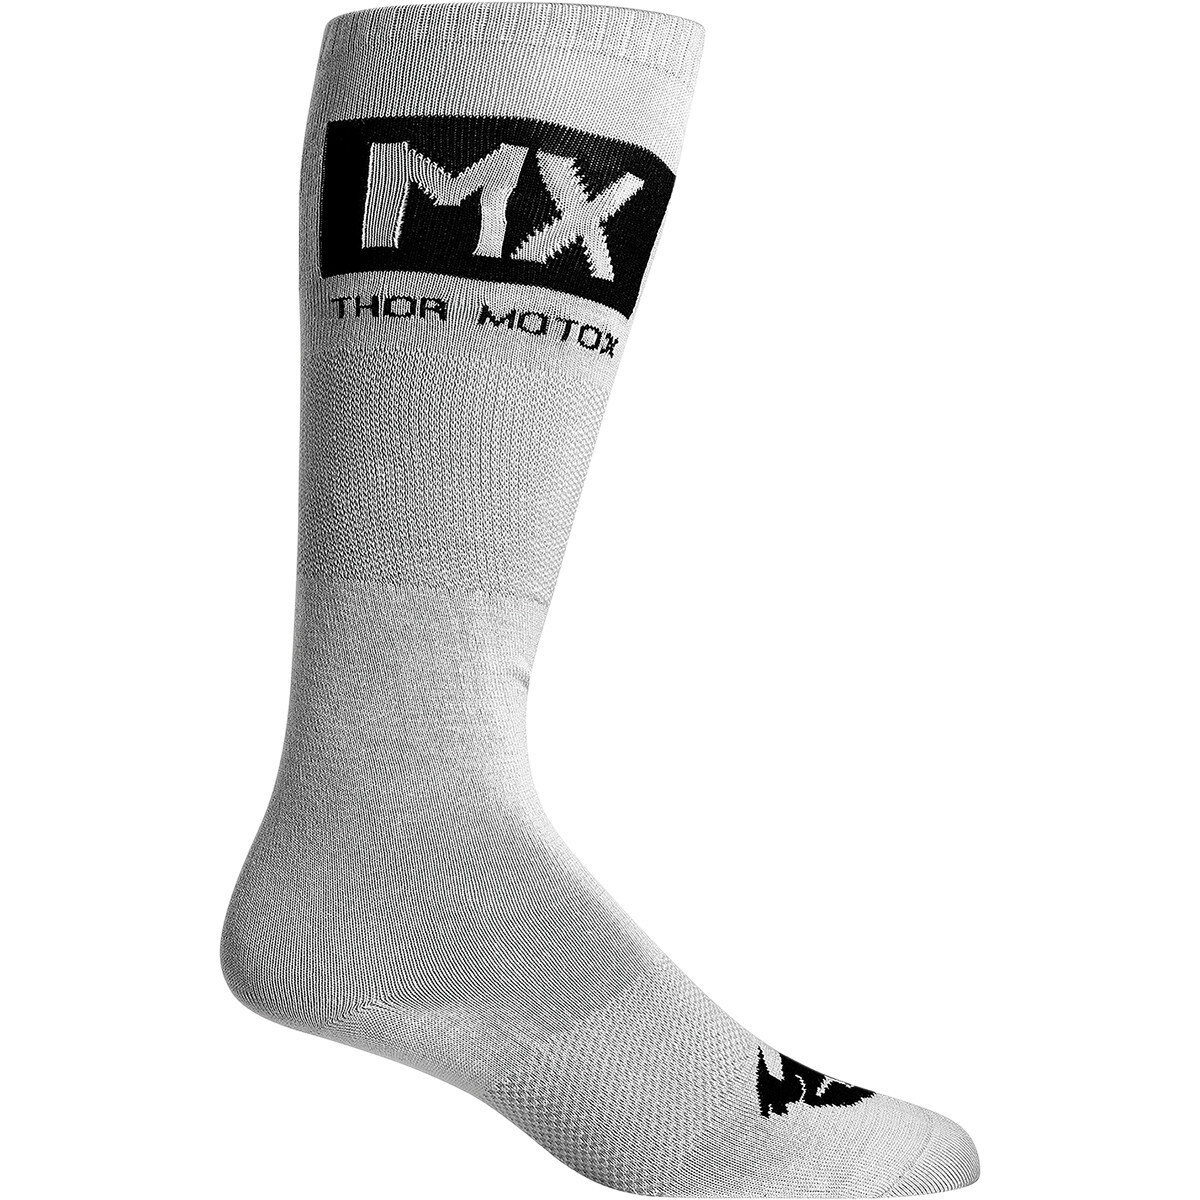 THOR
Youth MX Cool Socks - Gray/Black - Size 1-7 (EU32-39)